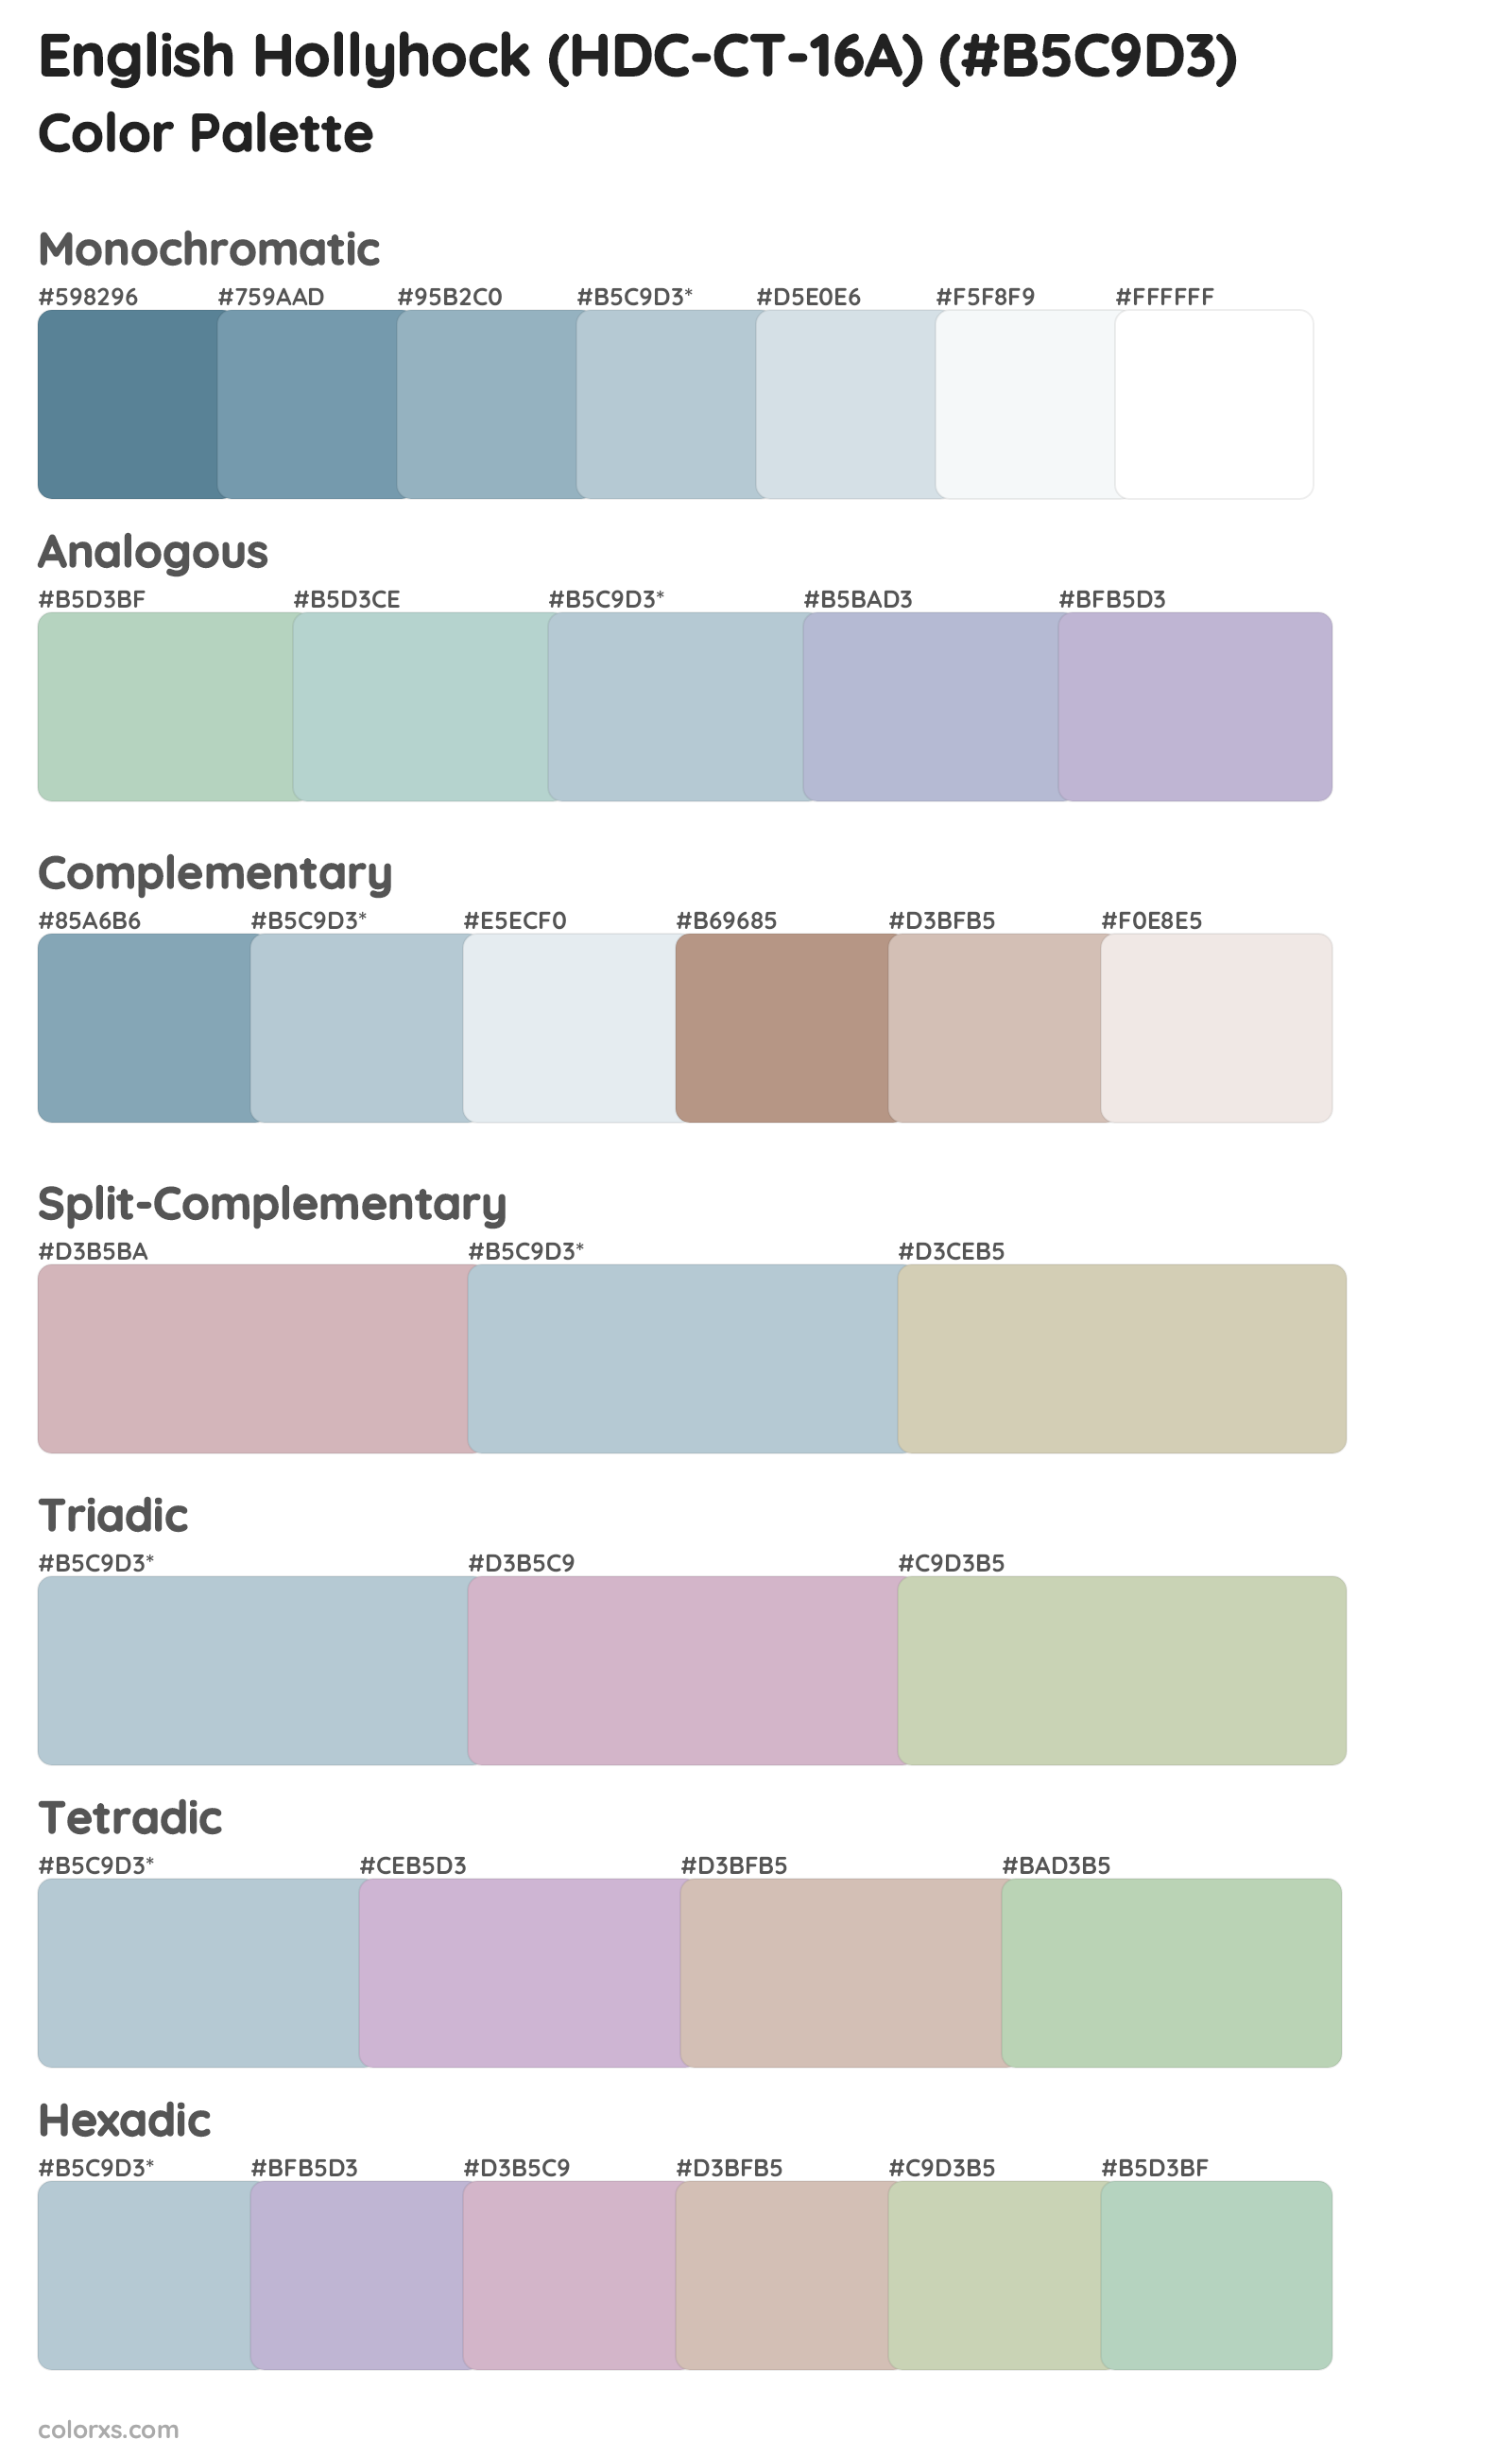 English Hollyhock (HDC-CT-16A) Color Scheme Palettes